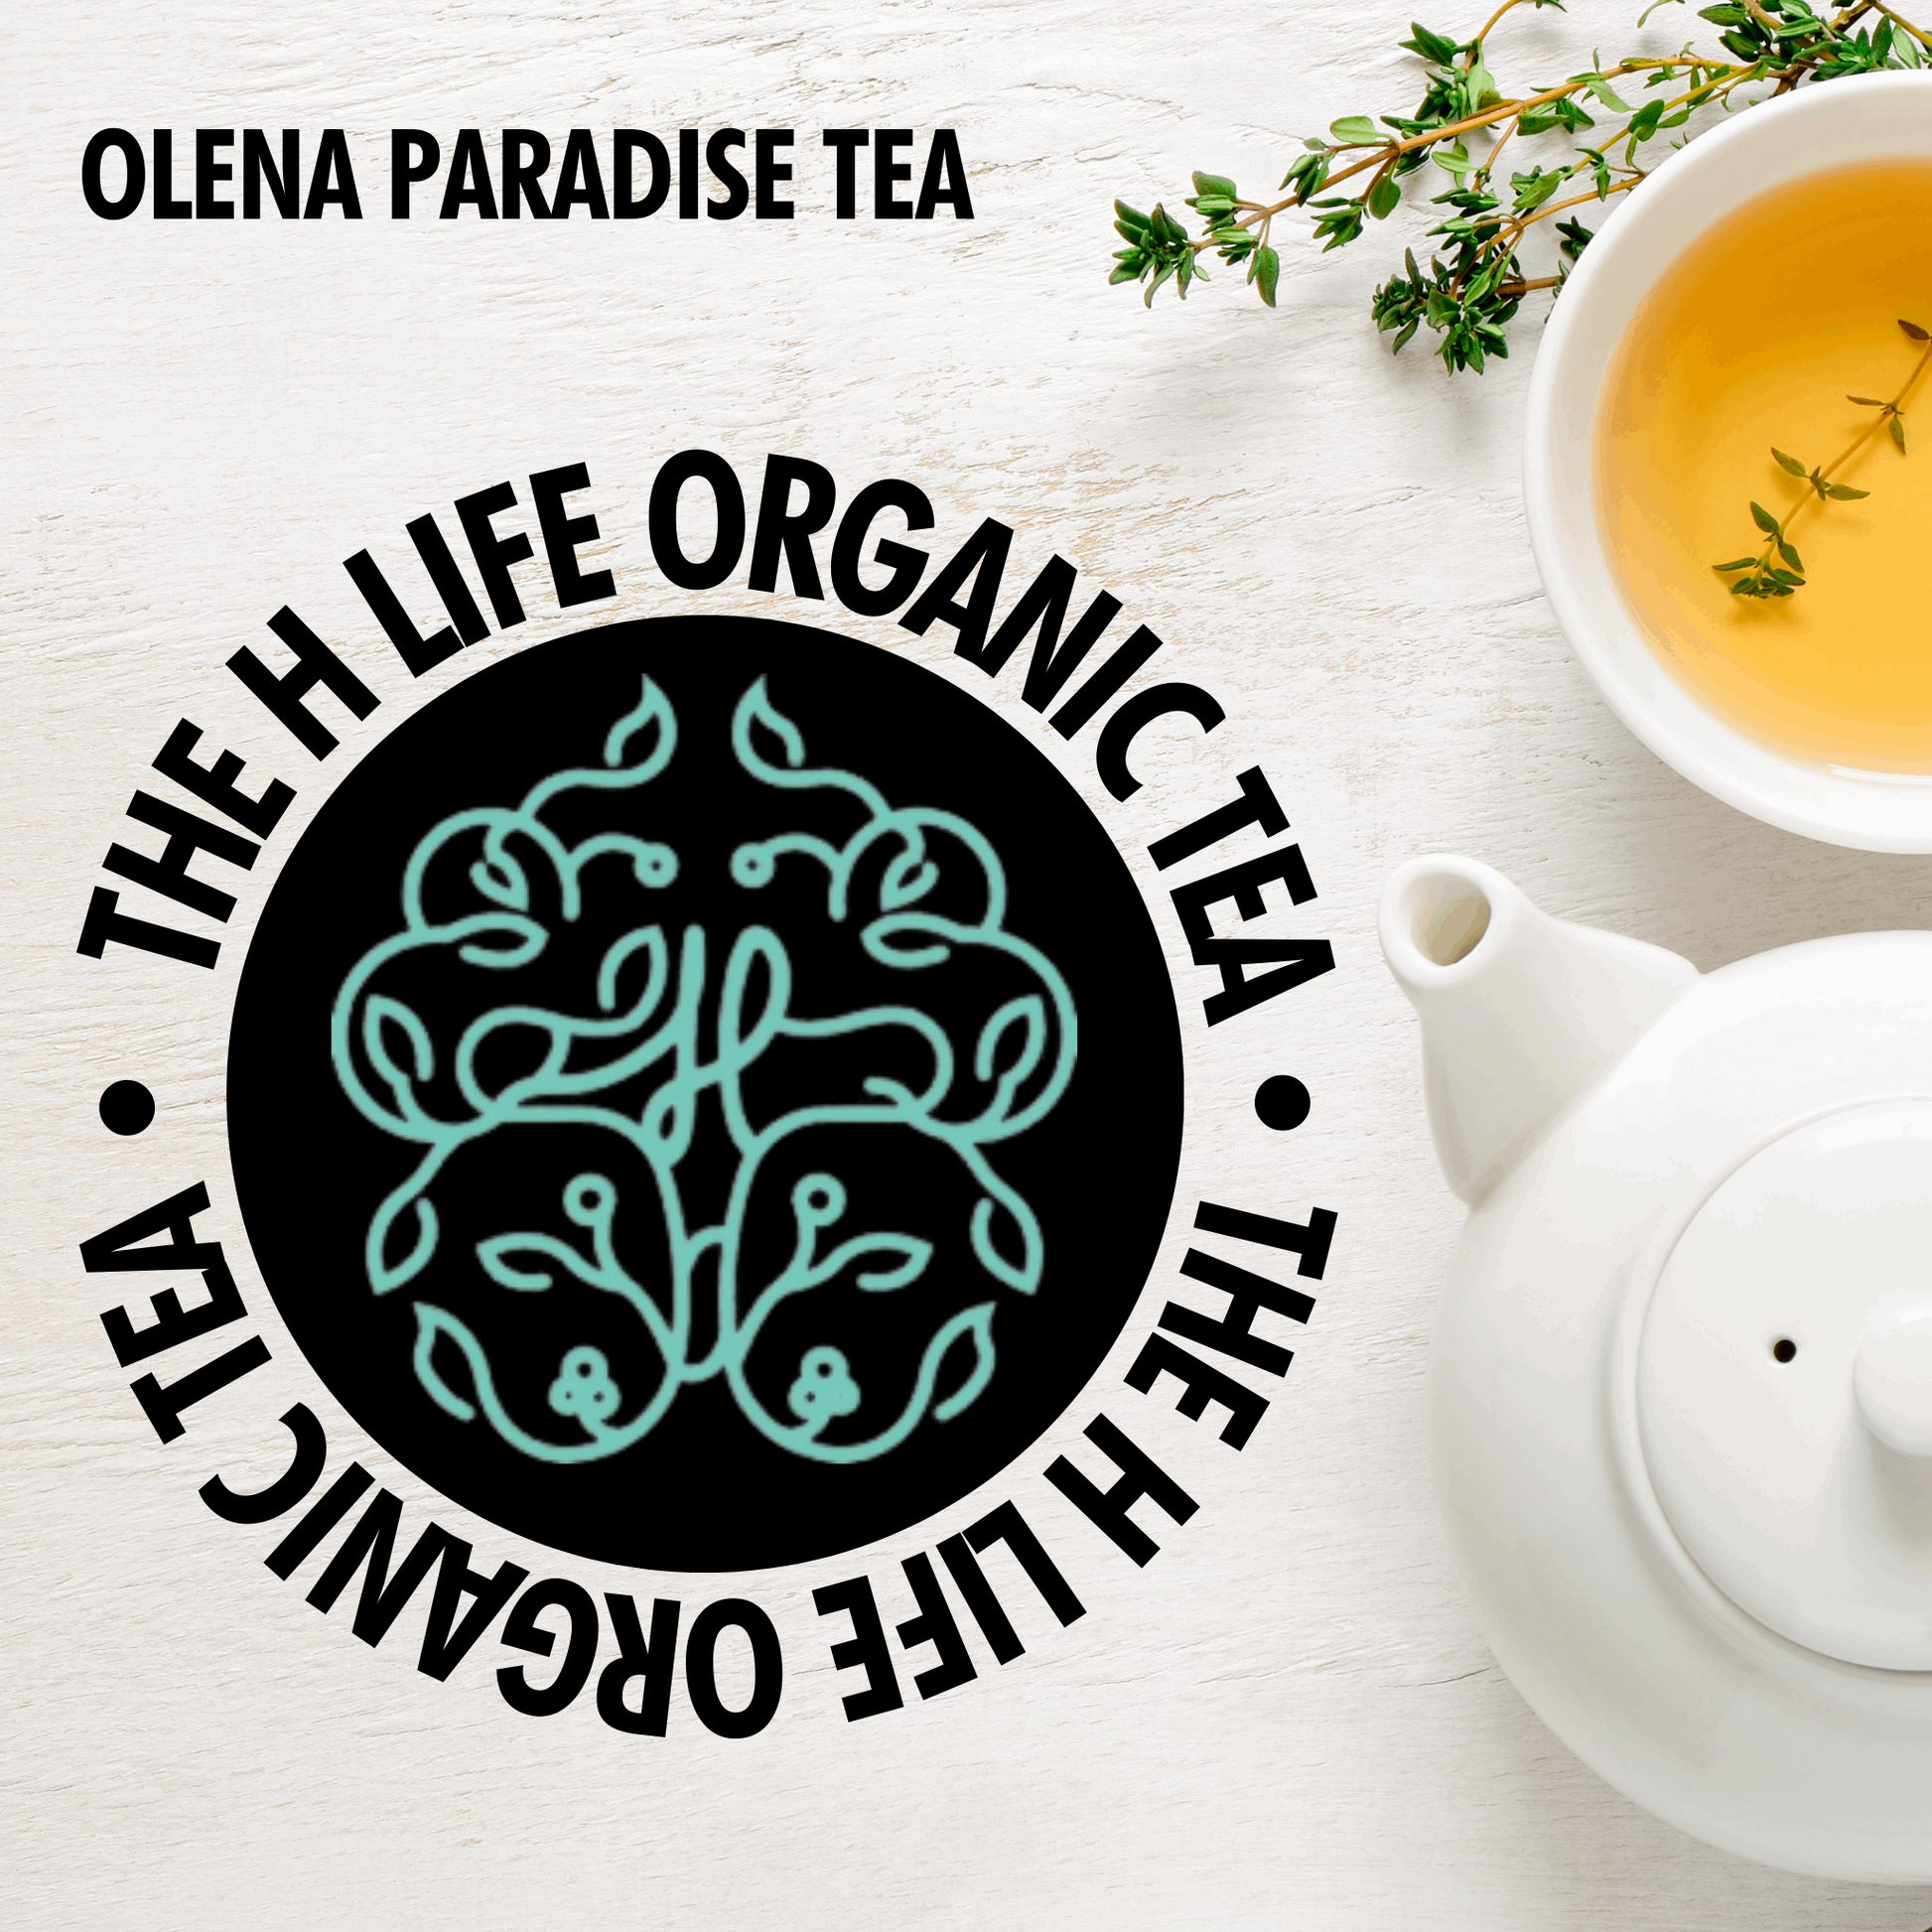 Olena Paradise Tea